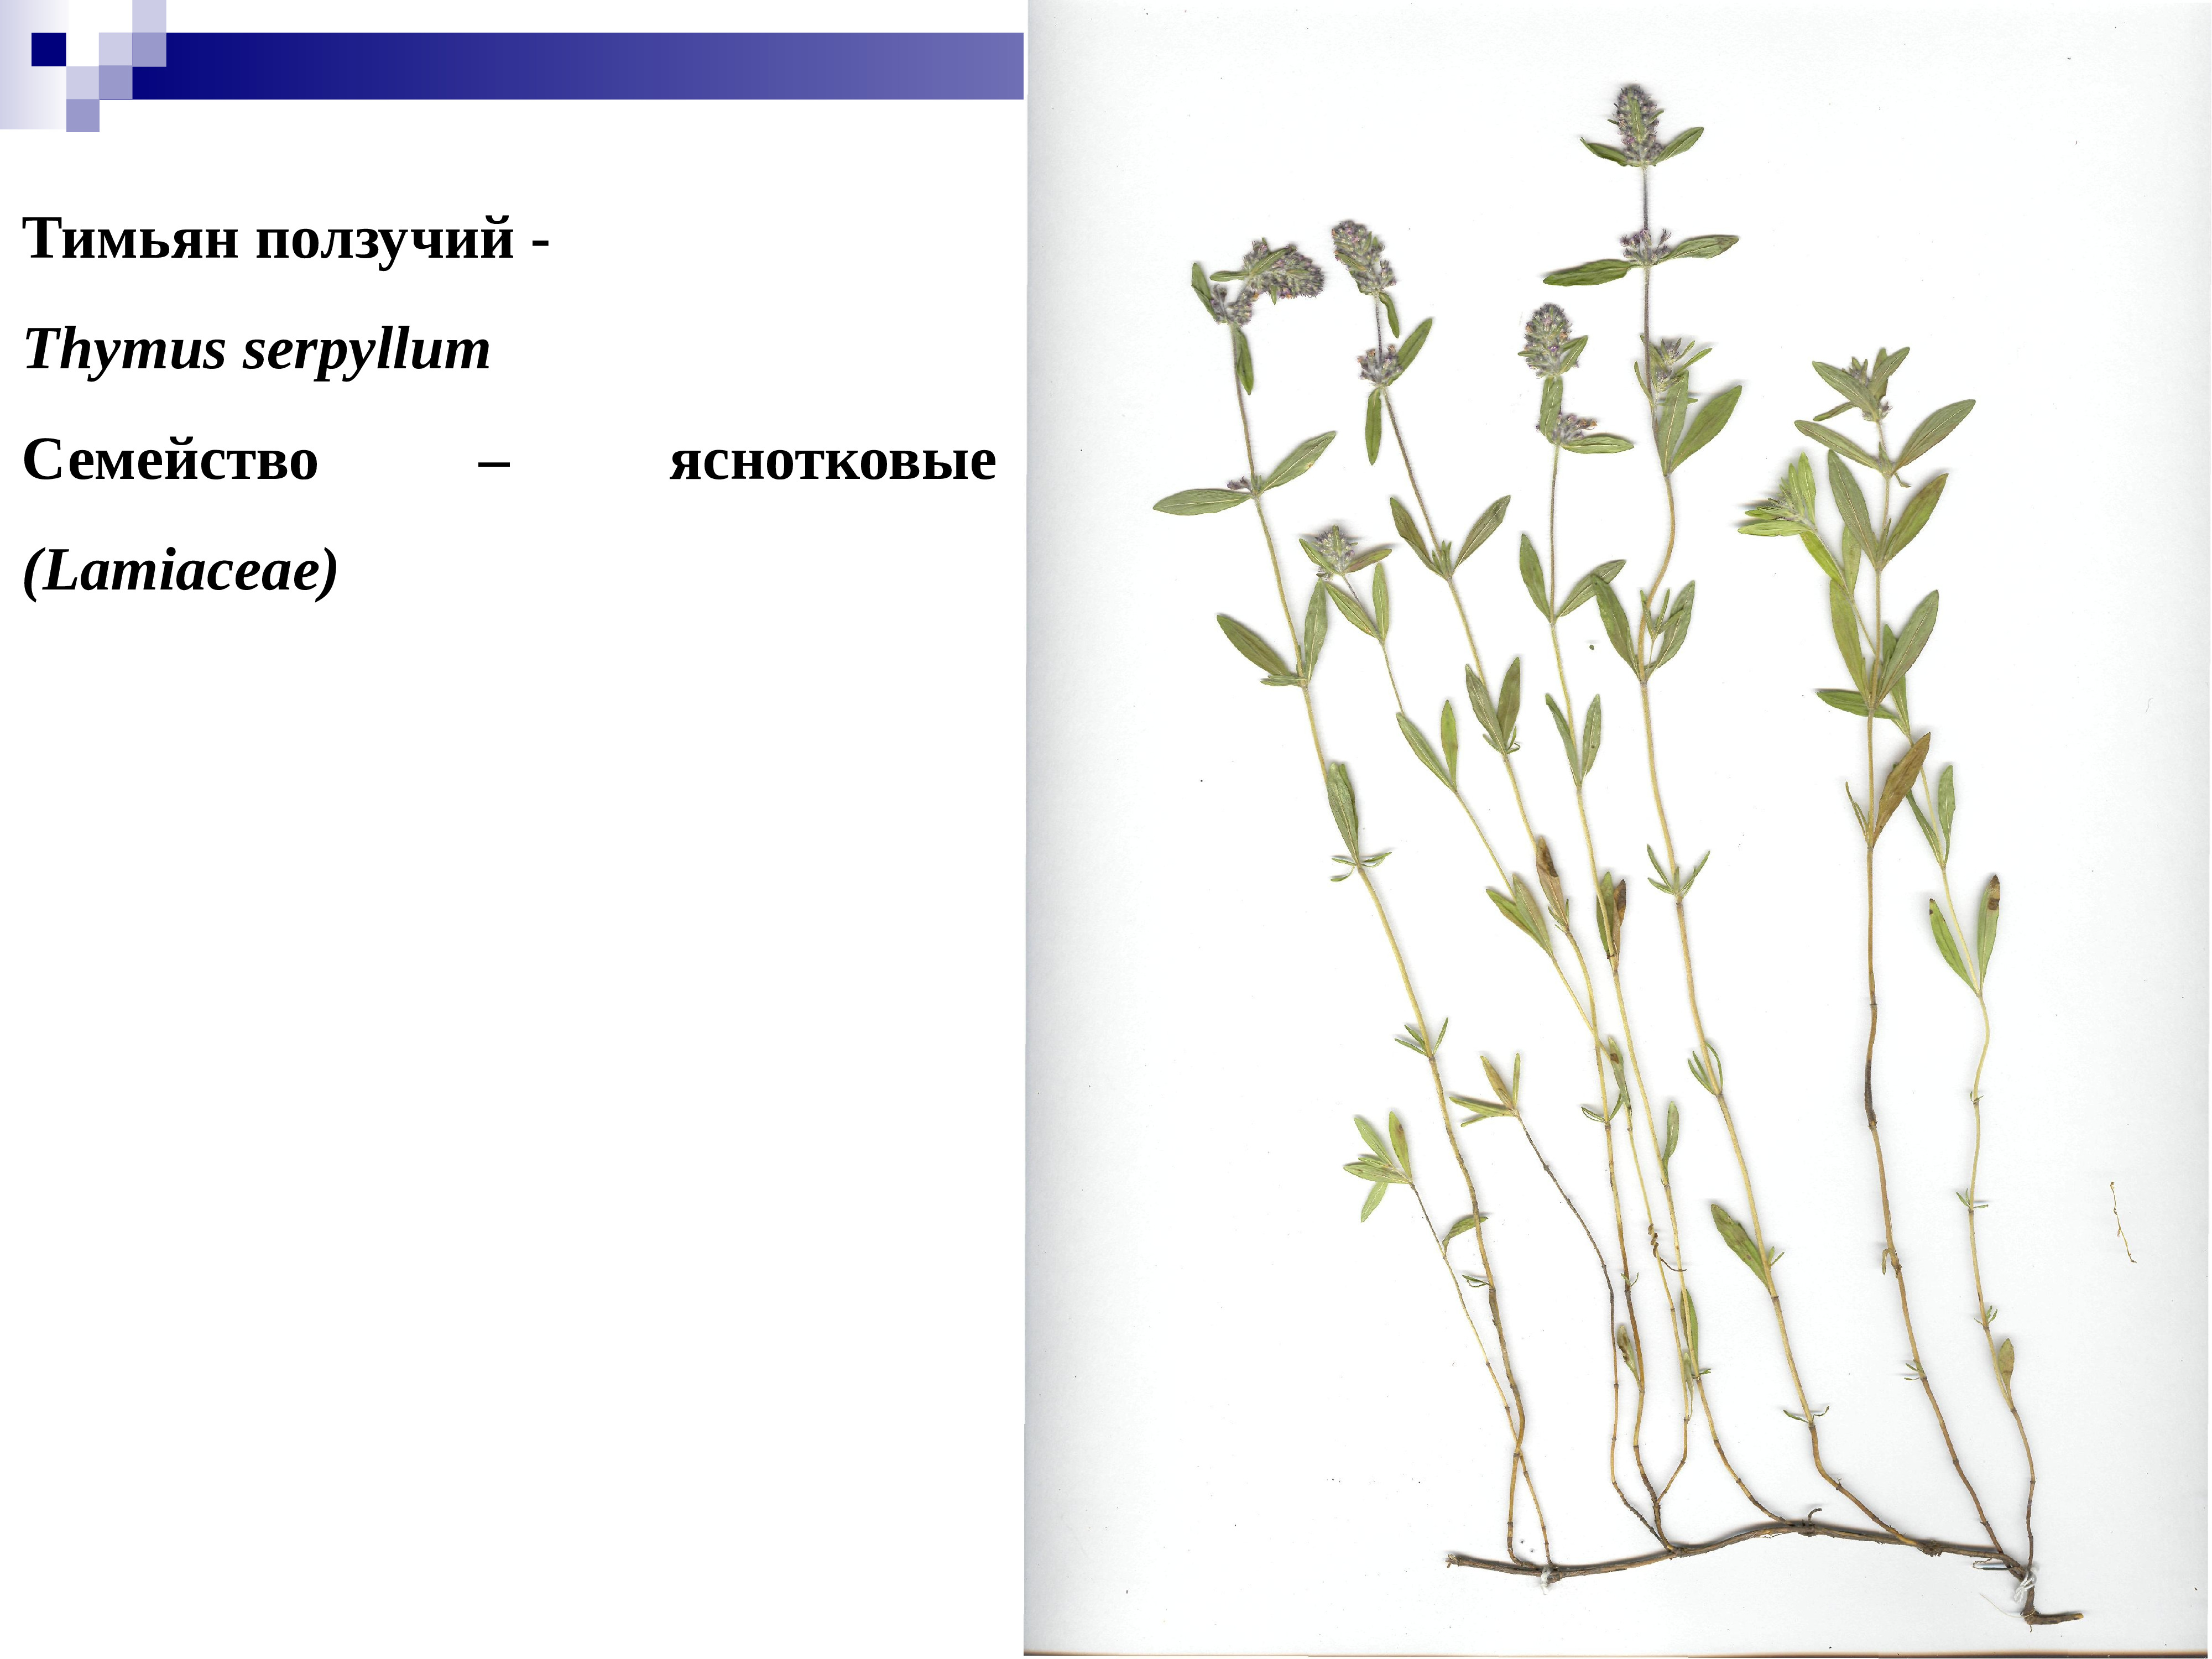 Thymus serpyllum гербарий